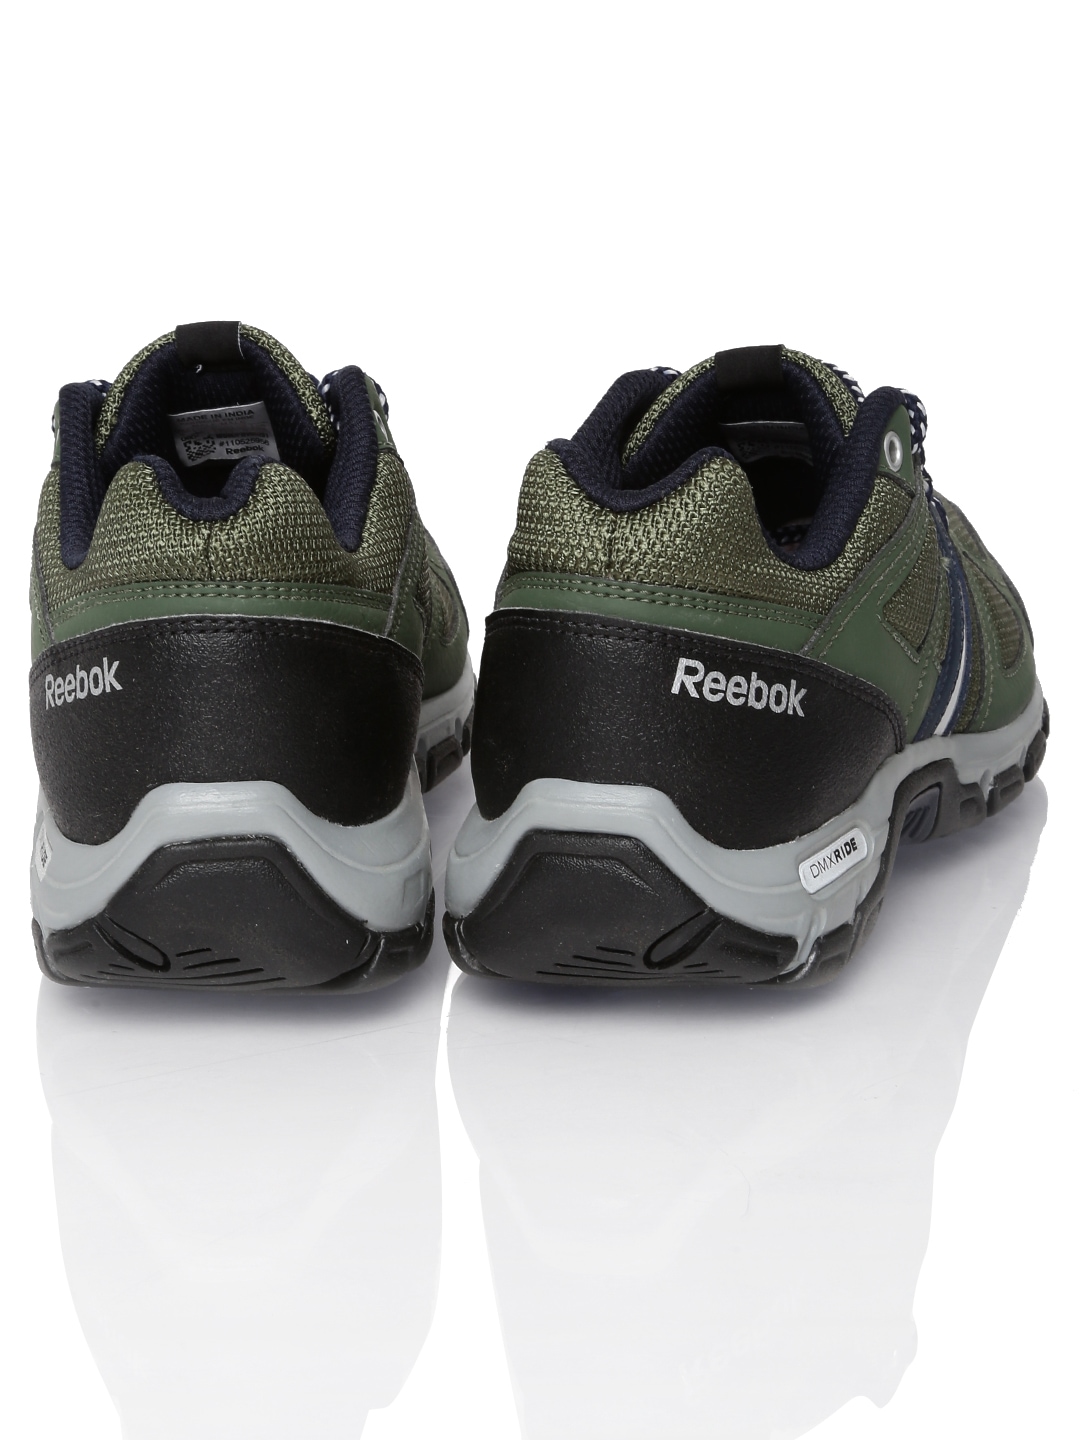 reebok adventure rider lp outdoors shoes price